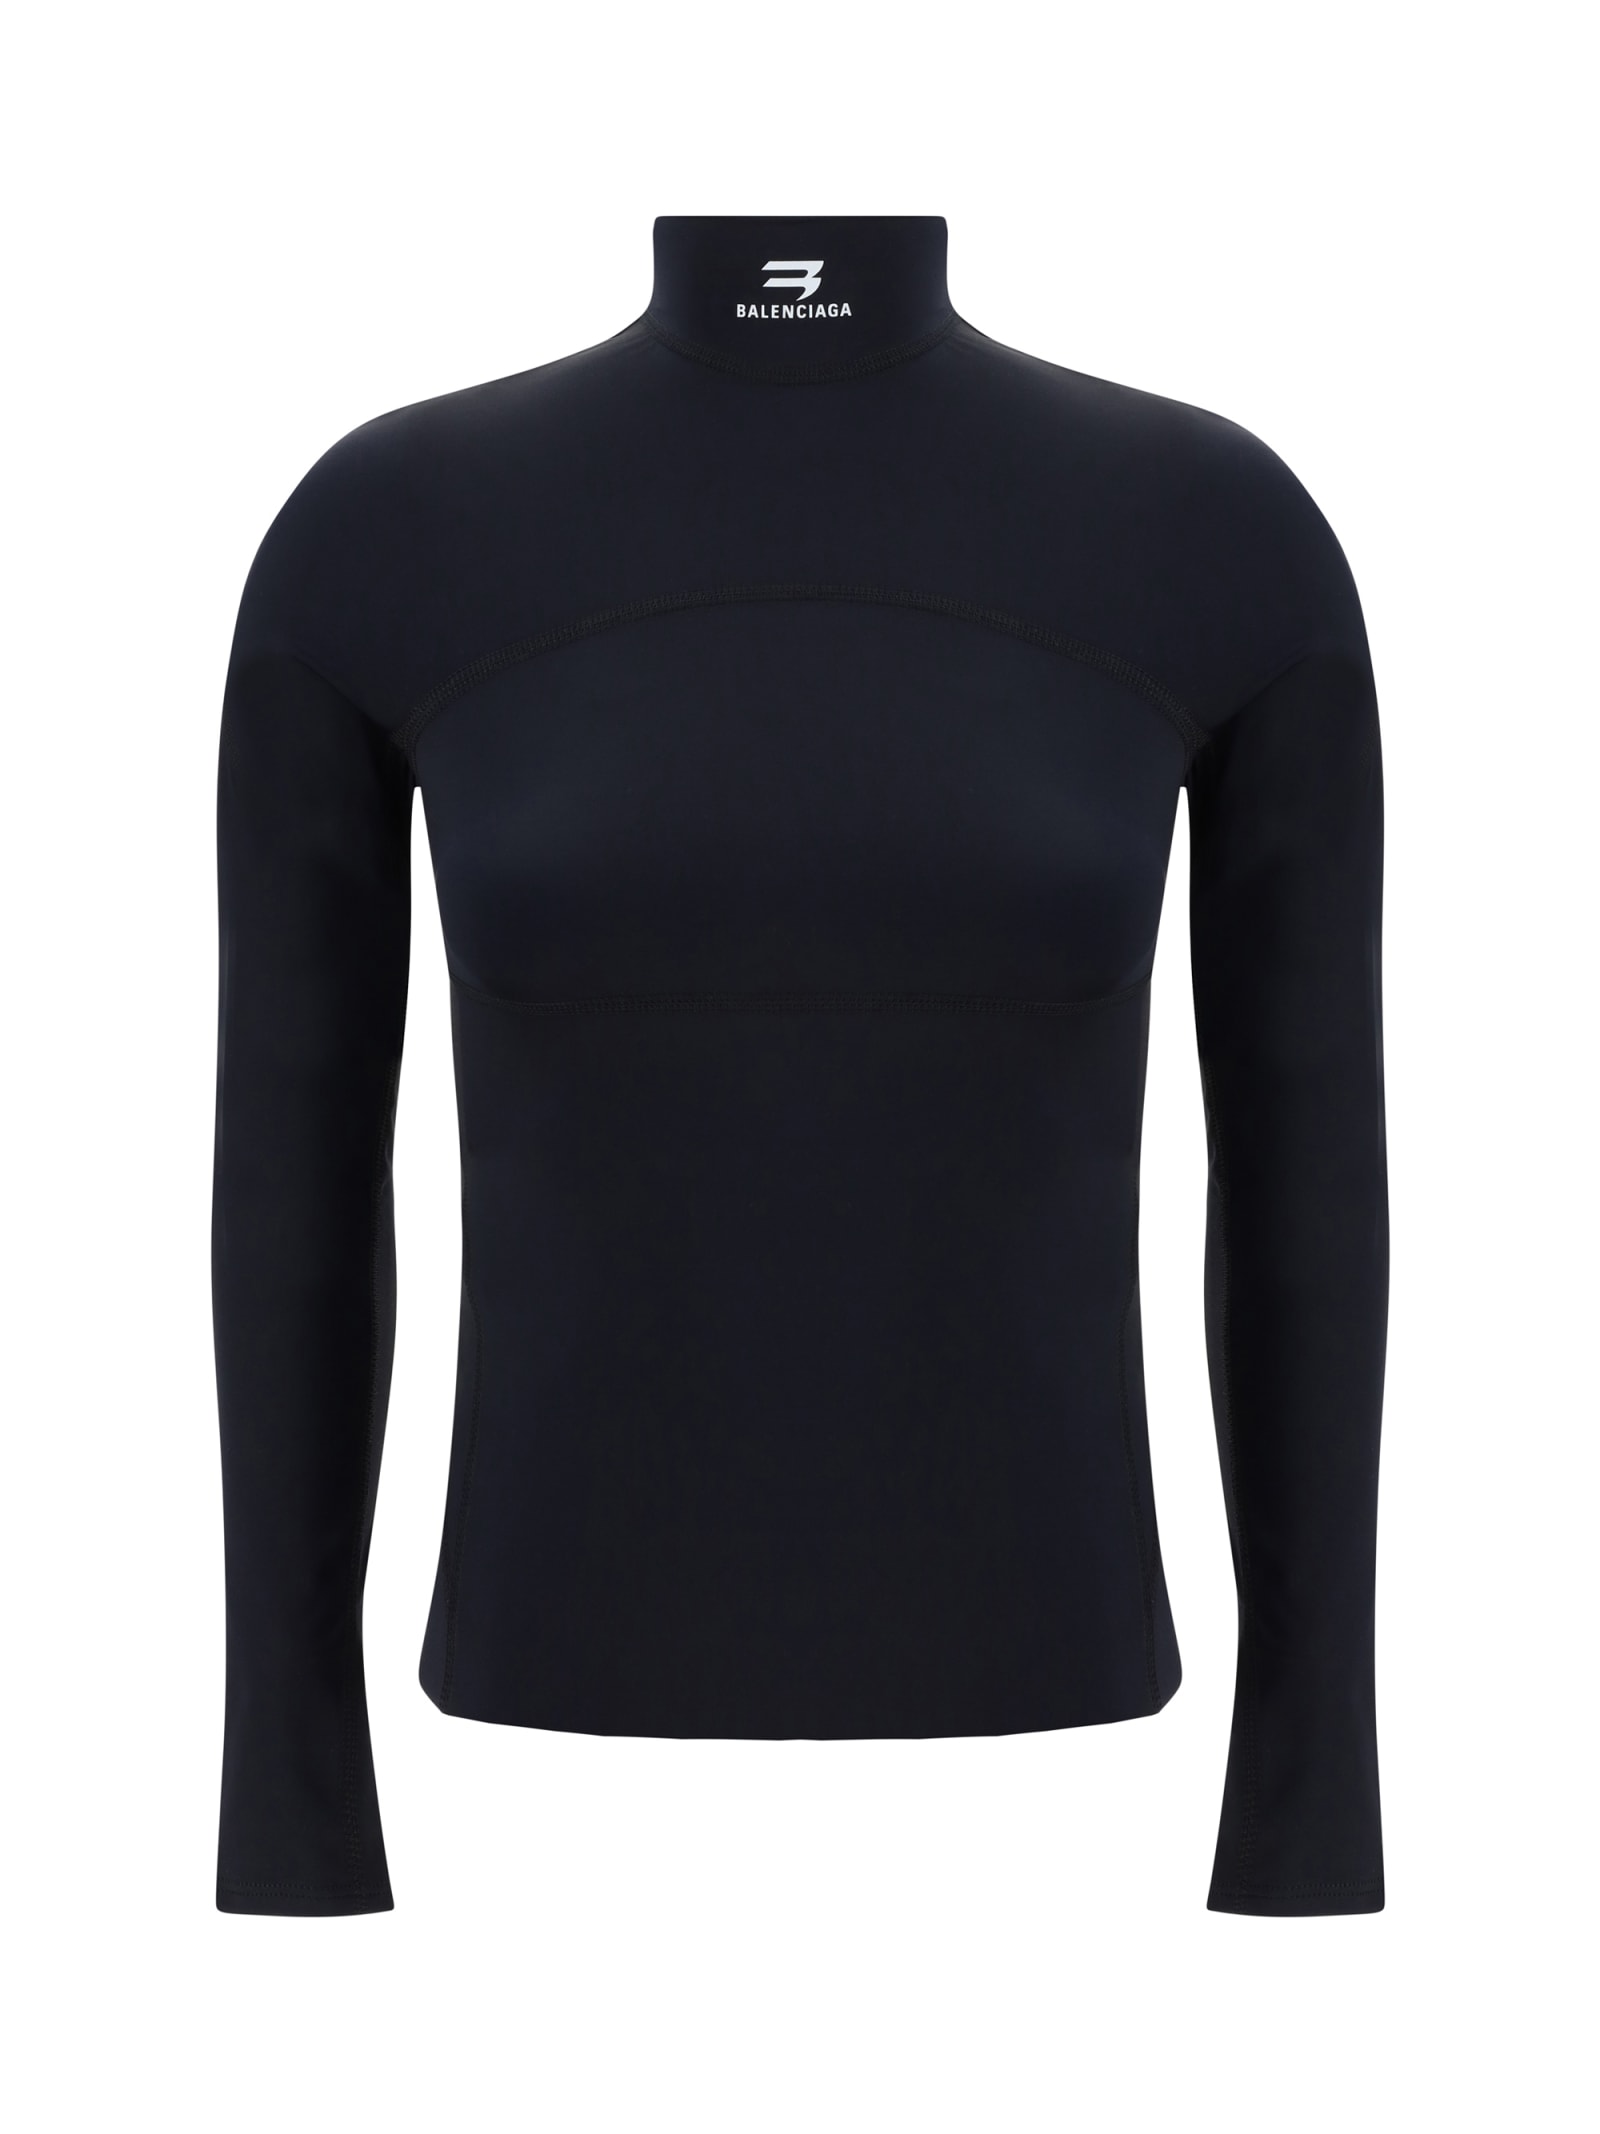 Balenciaga Long-sleeved Jersey In Black